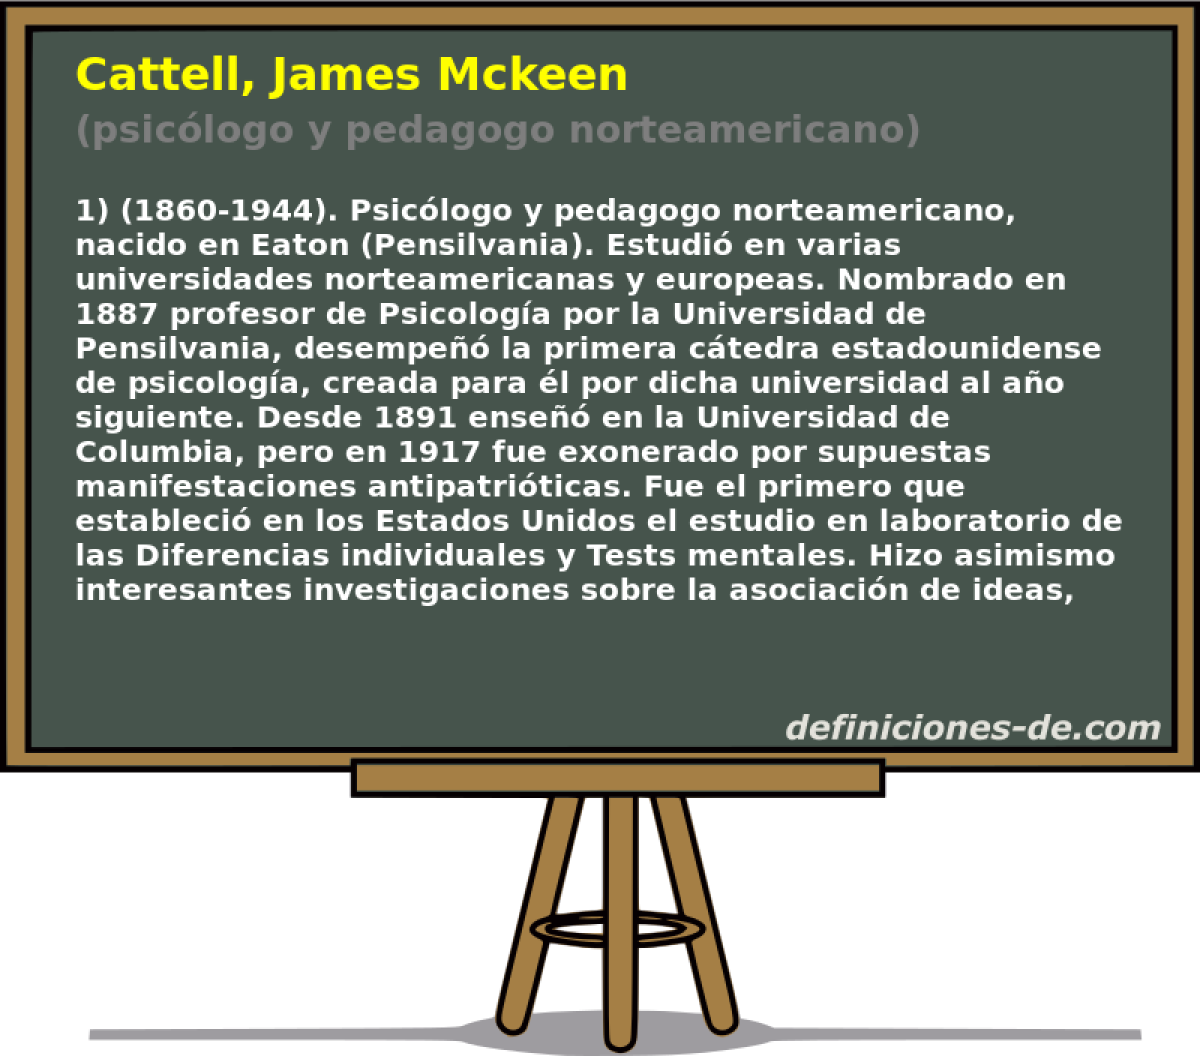 Cattell, James Mckeen (psiclogo y pedagogo norteamericano)